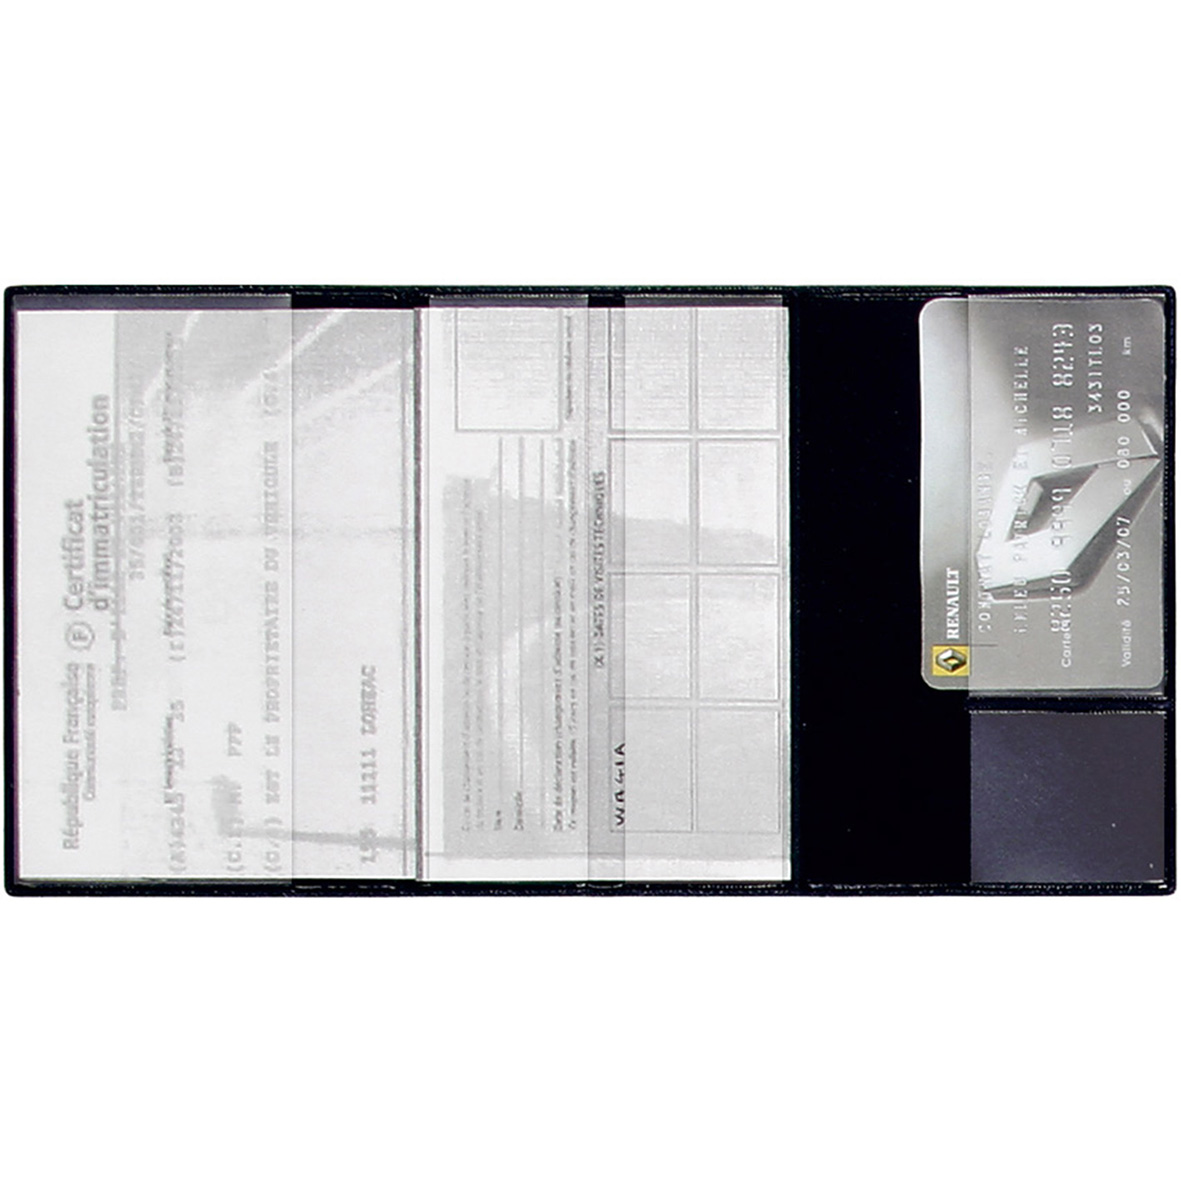 Porte-carte grise imitation cuir made in france - wa100n